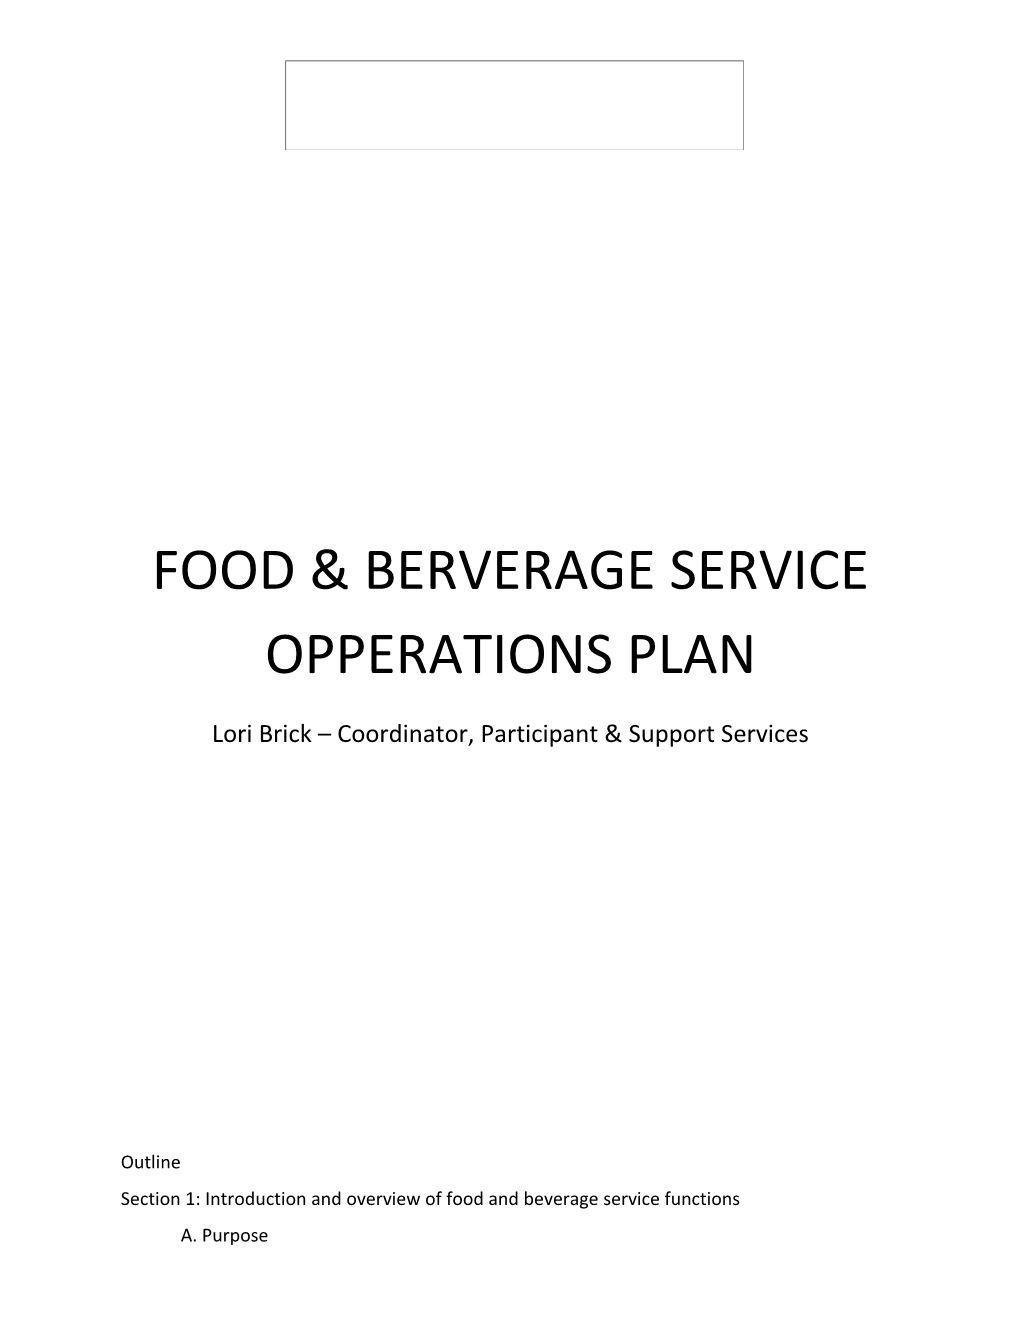 Food & Berverage Service Opperations Plan